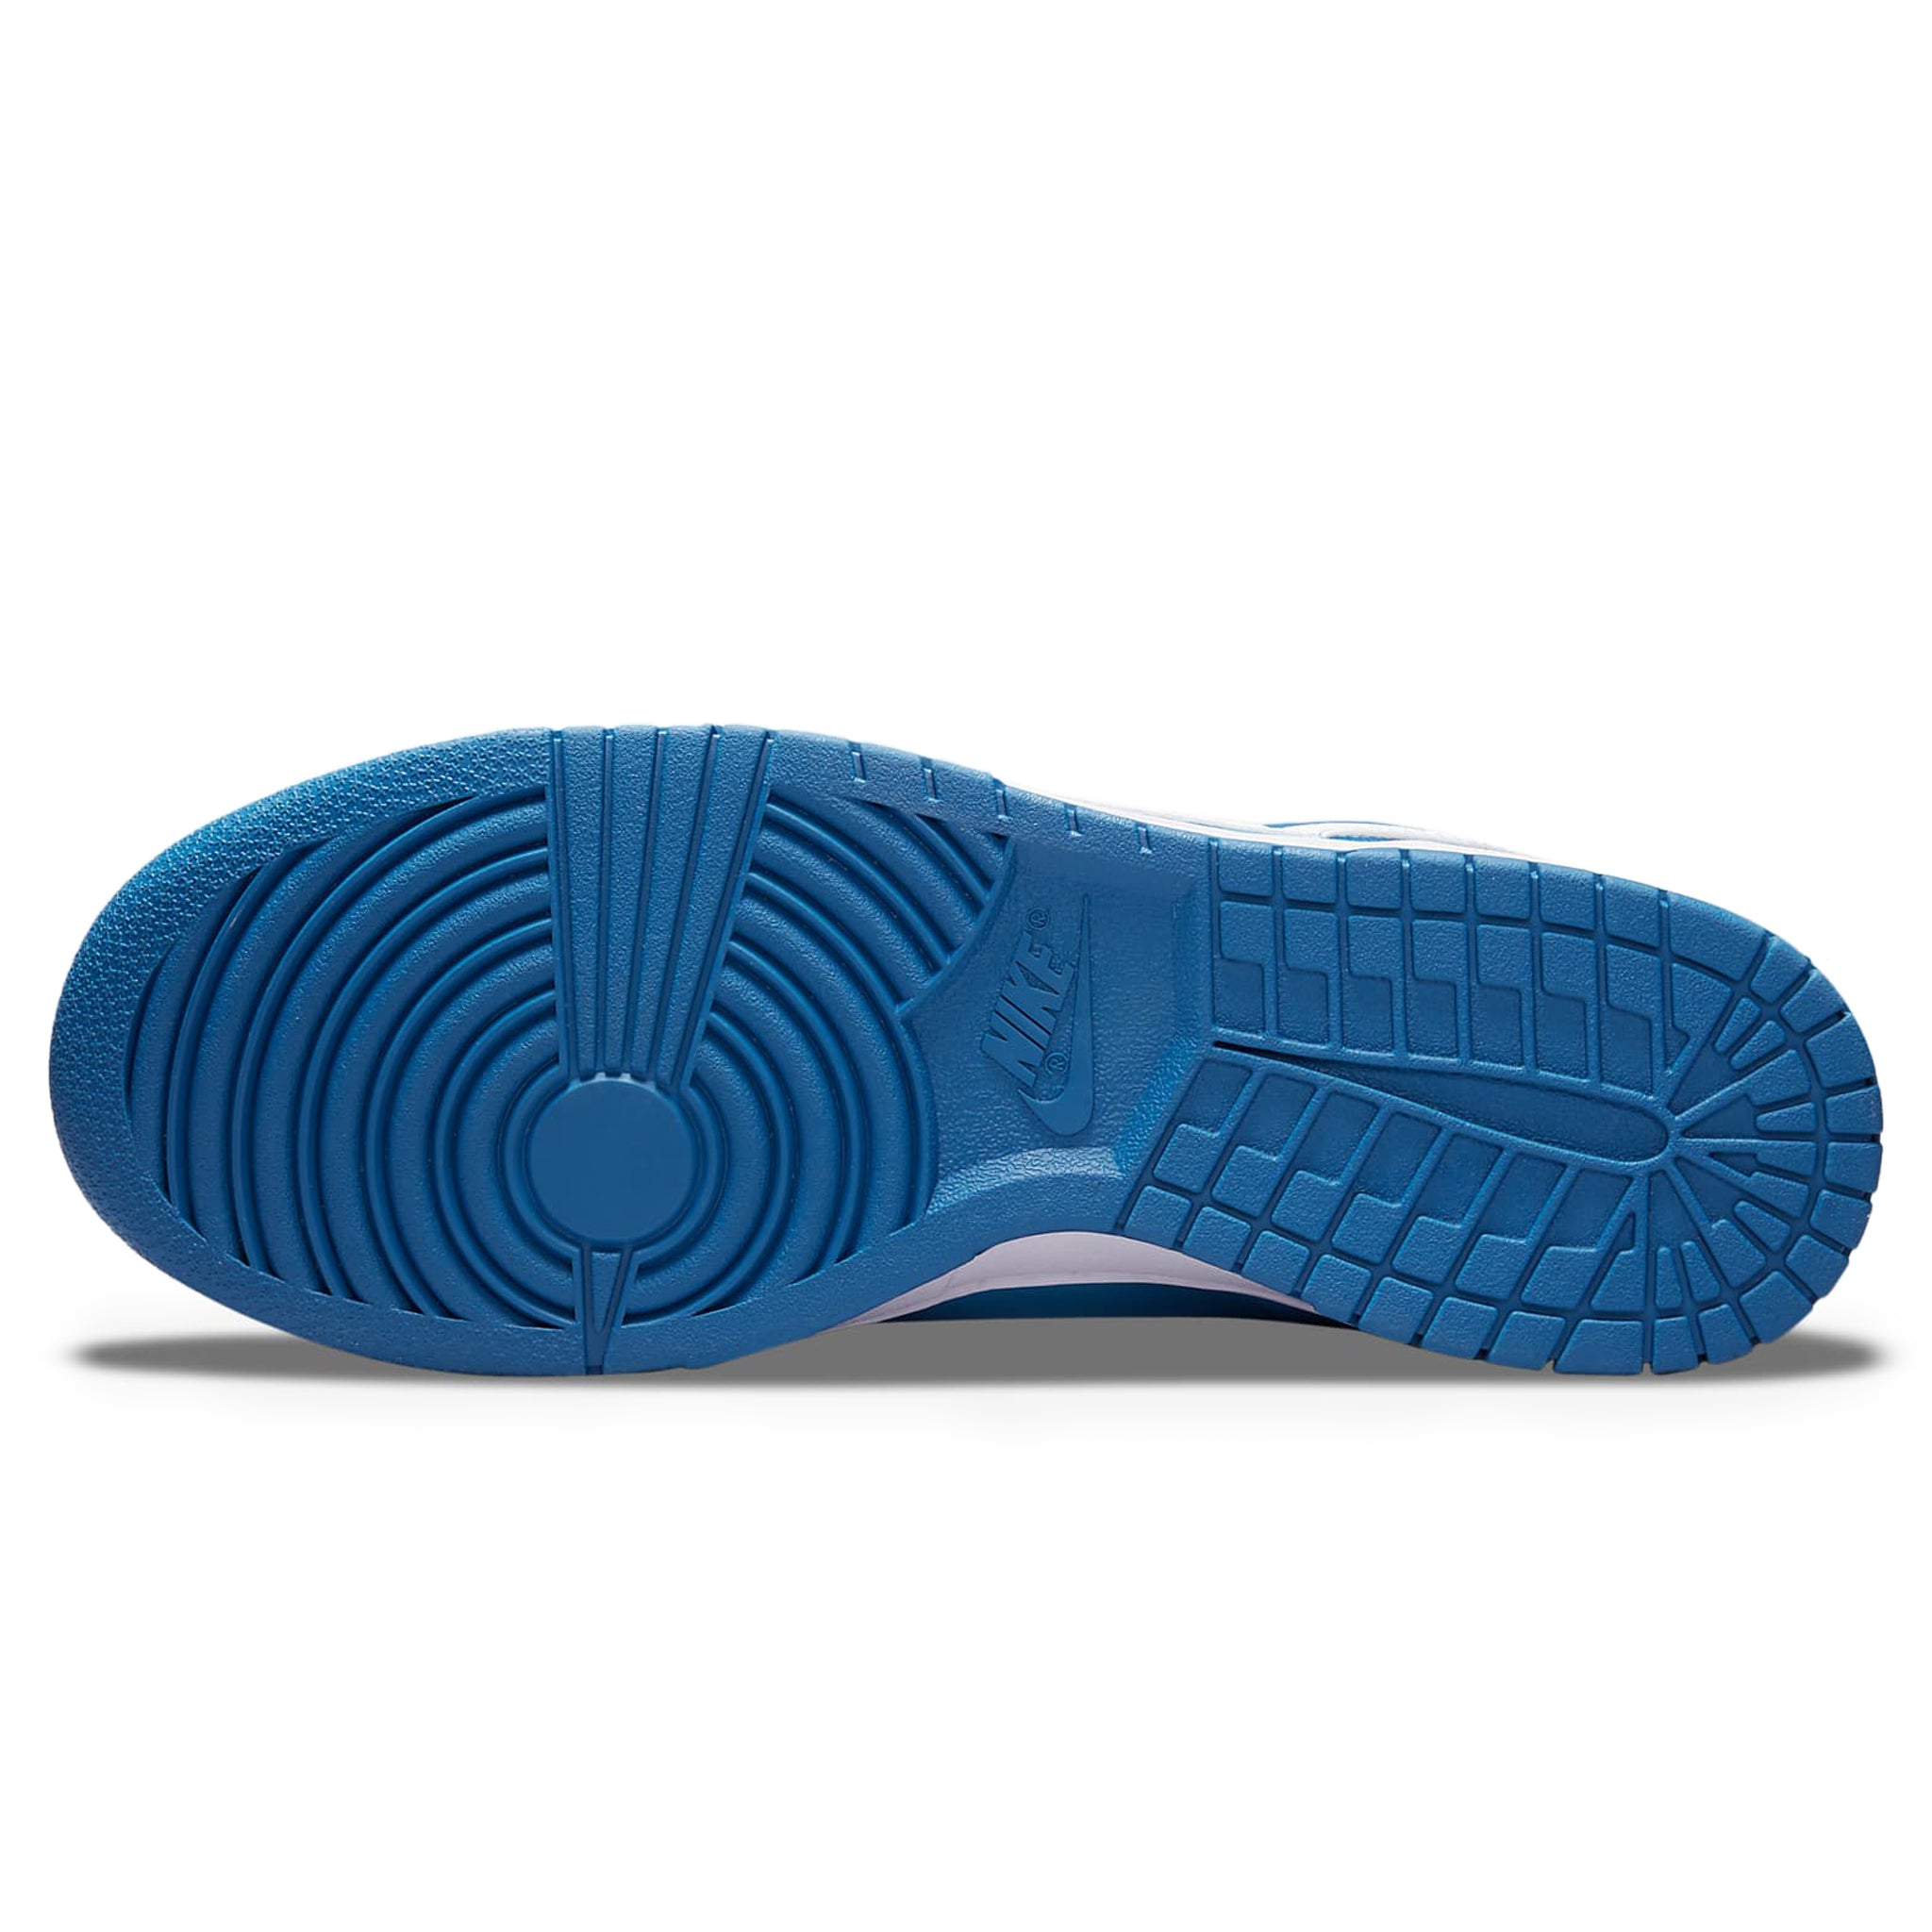 Sole view of Nike Dunk Low Dark Marina Blue DJ6188-400